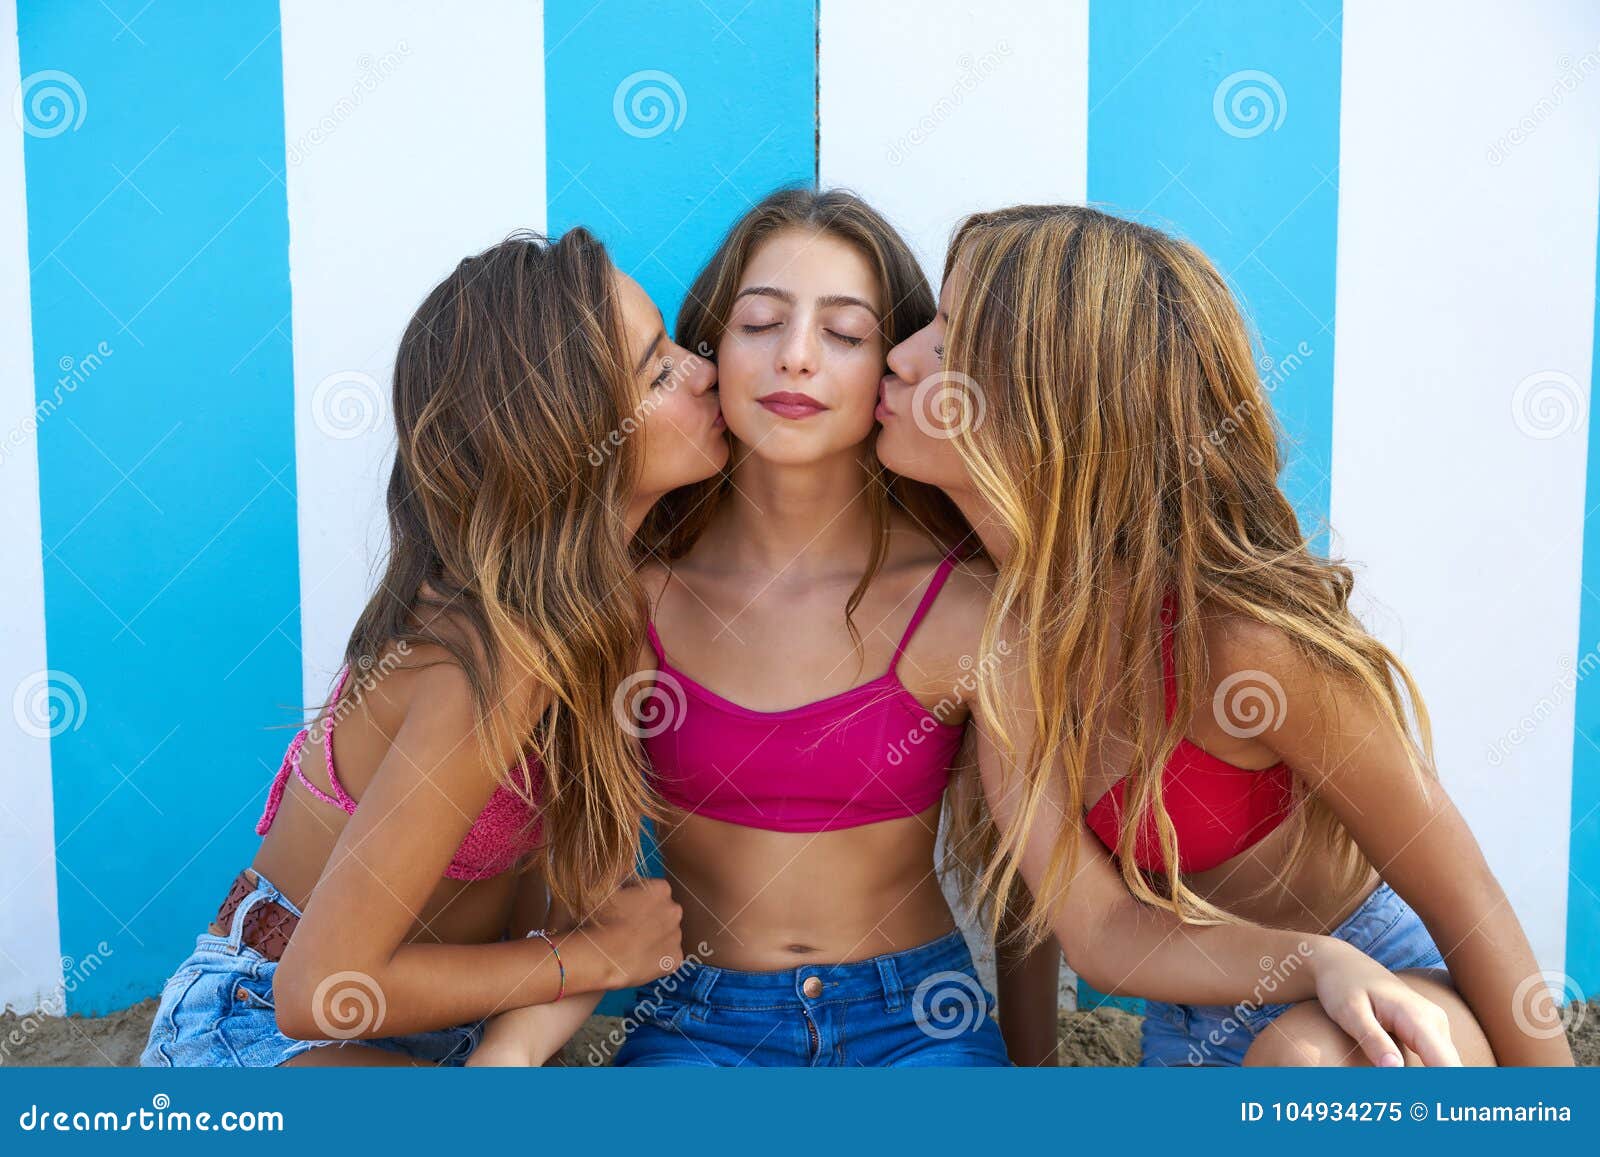 self shot girls kissing photo